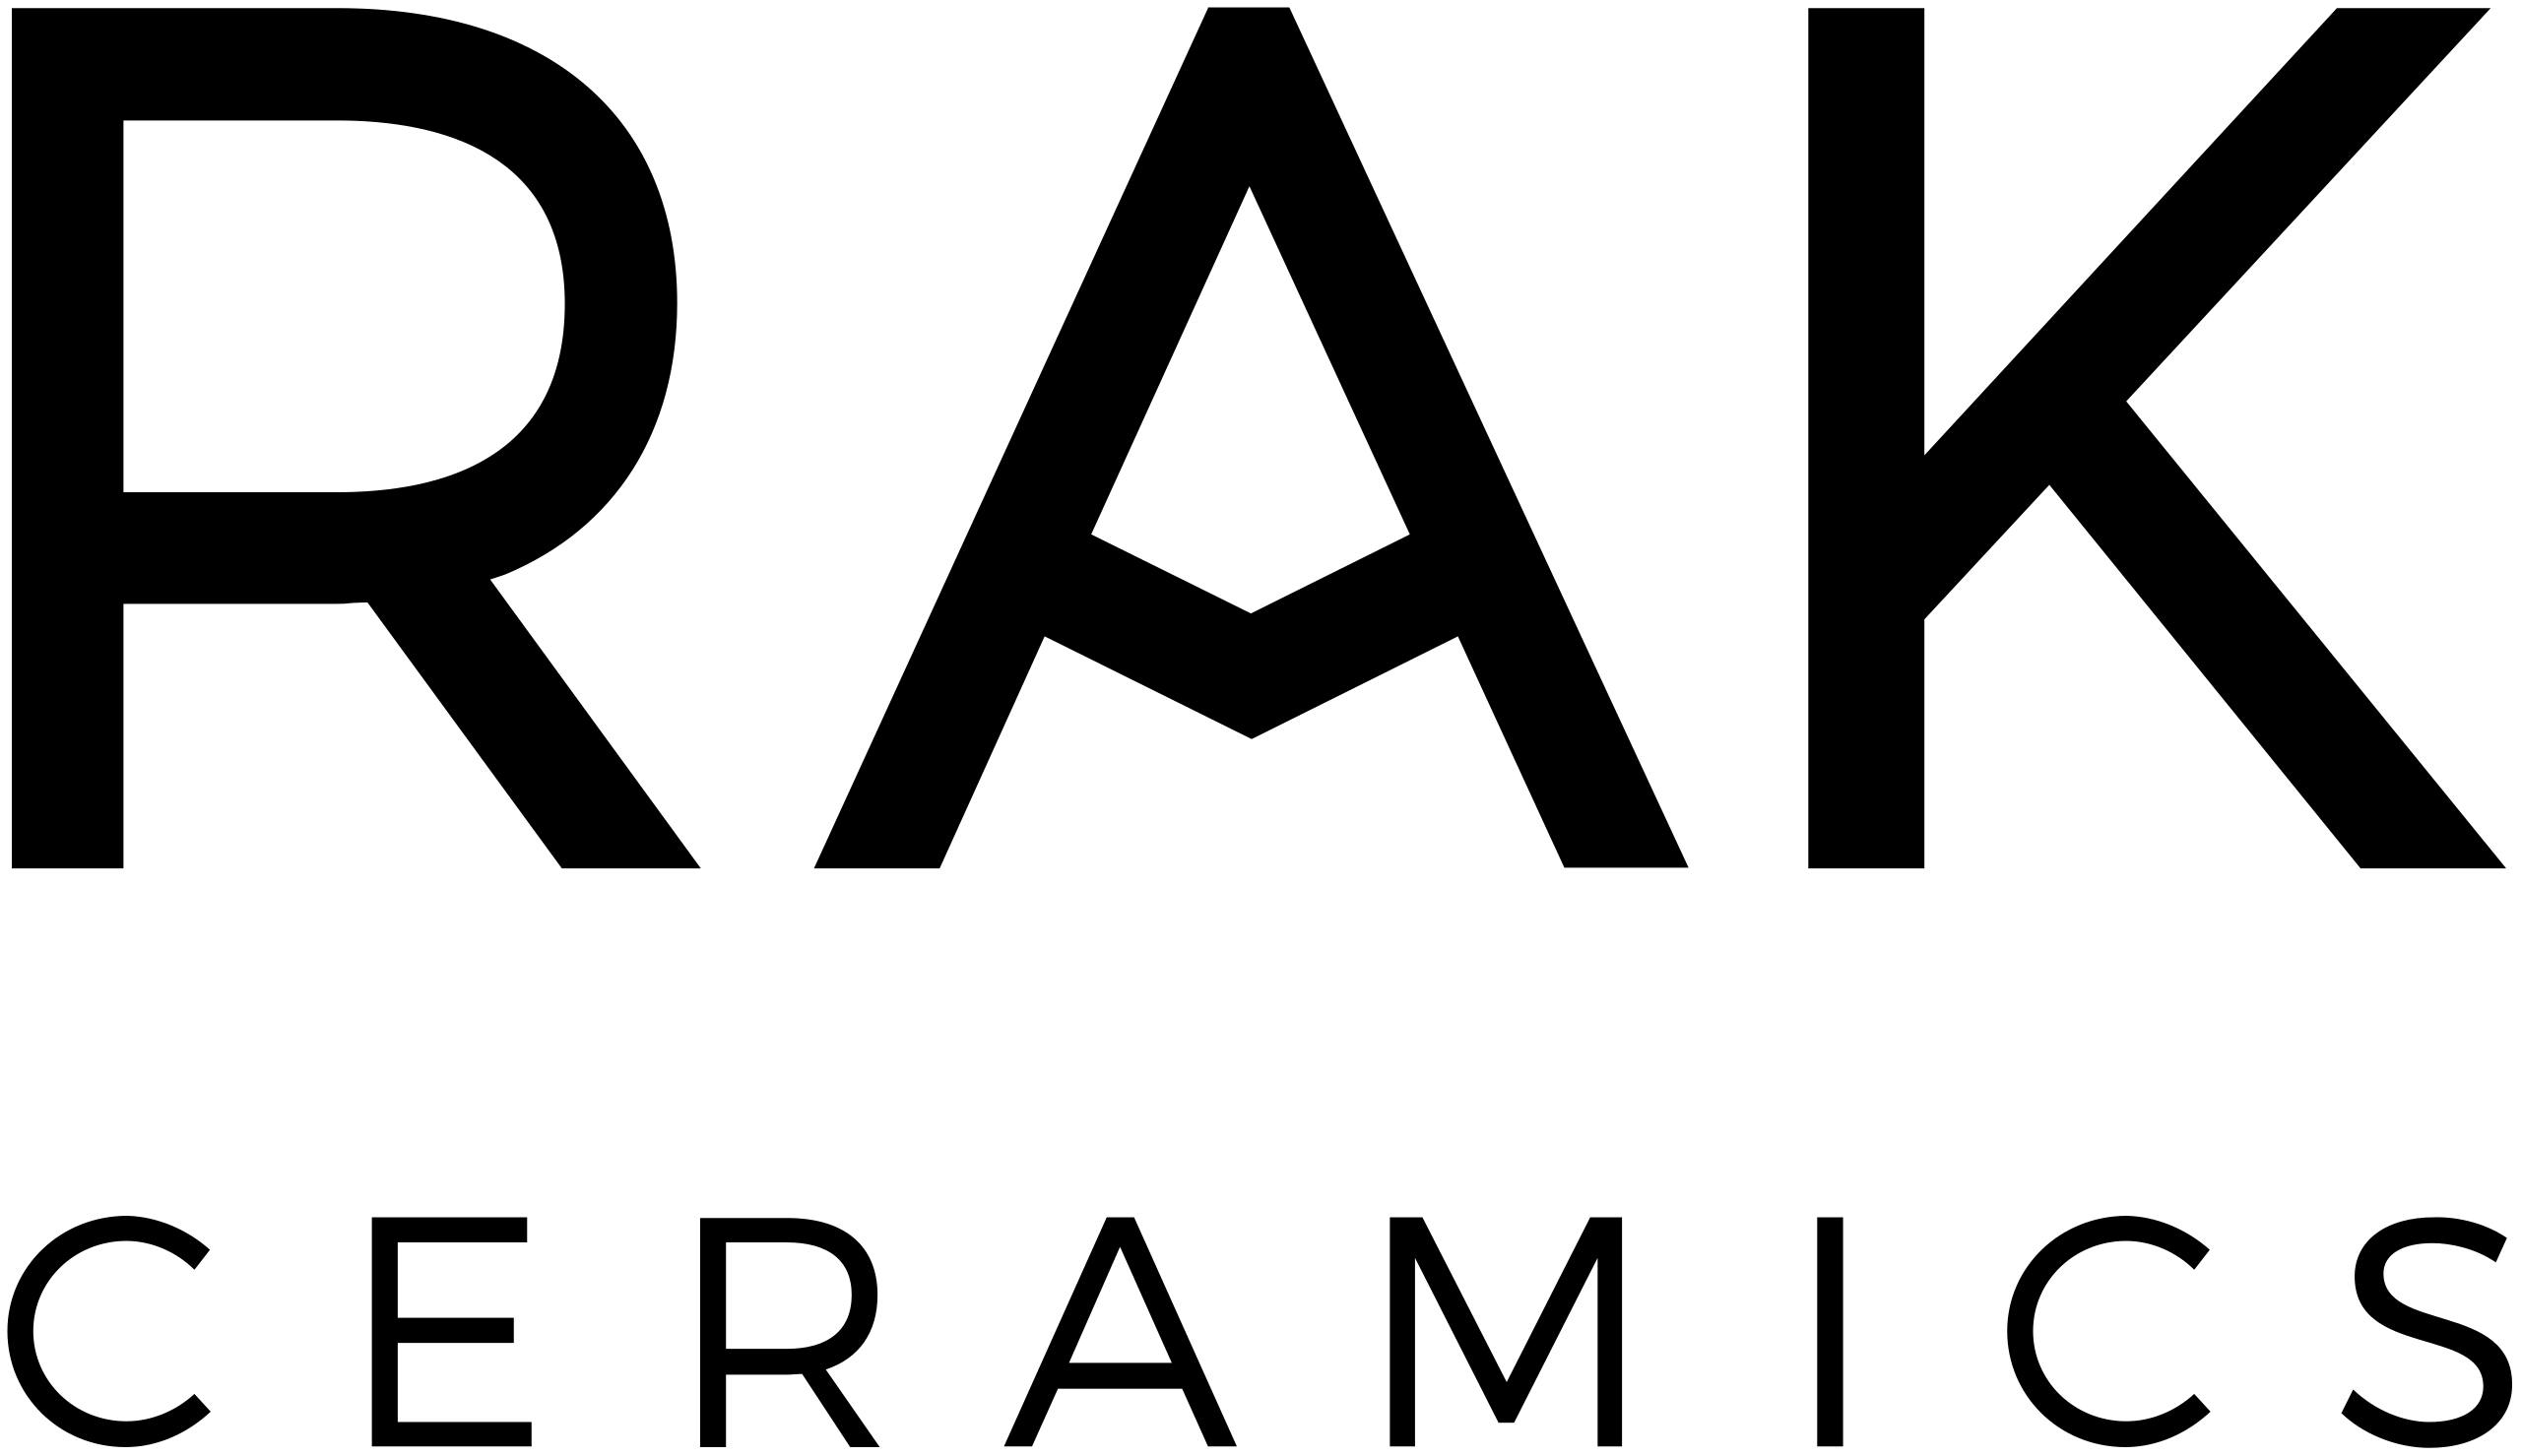 rak-logo